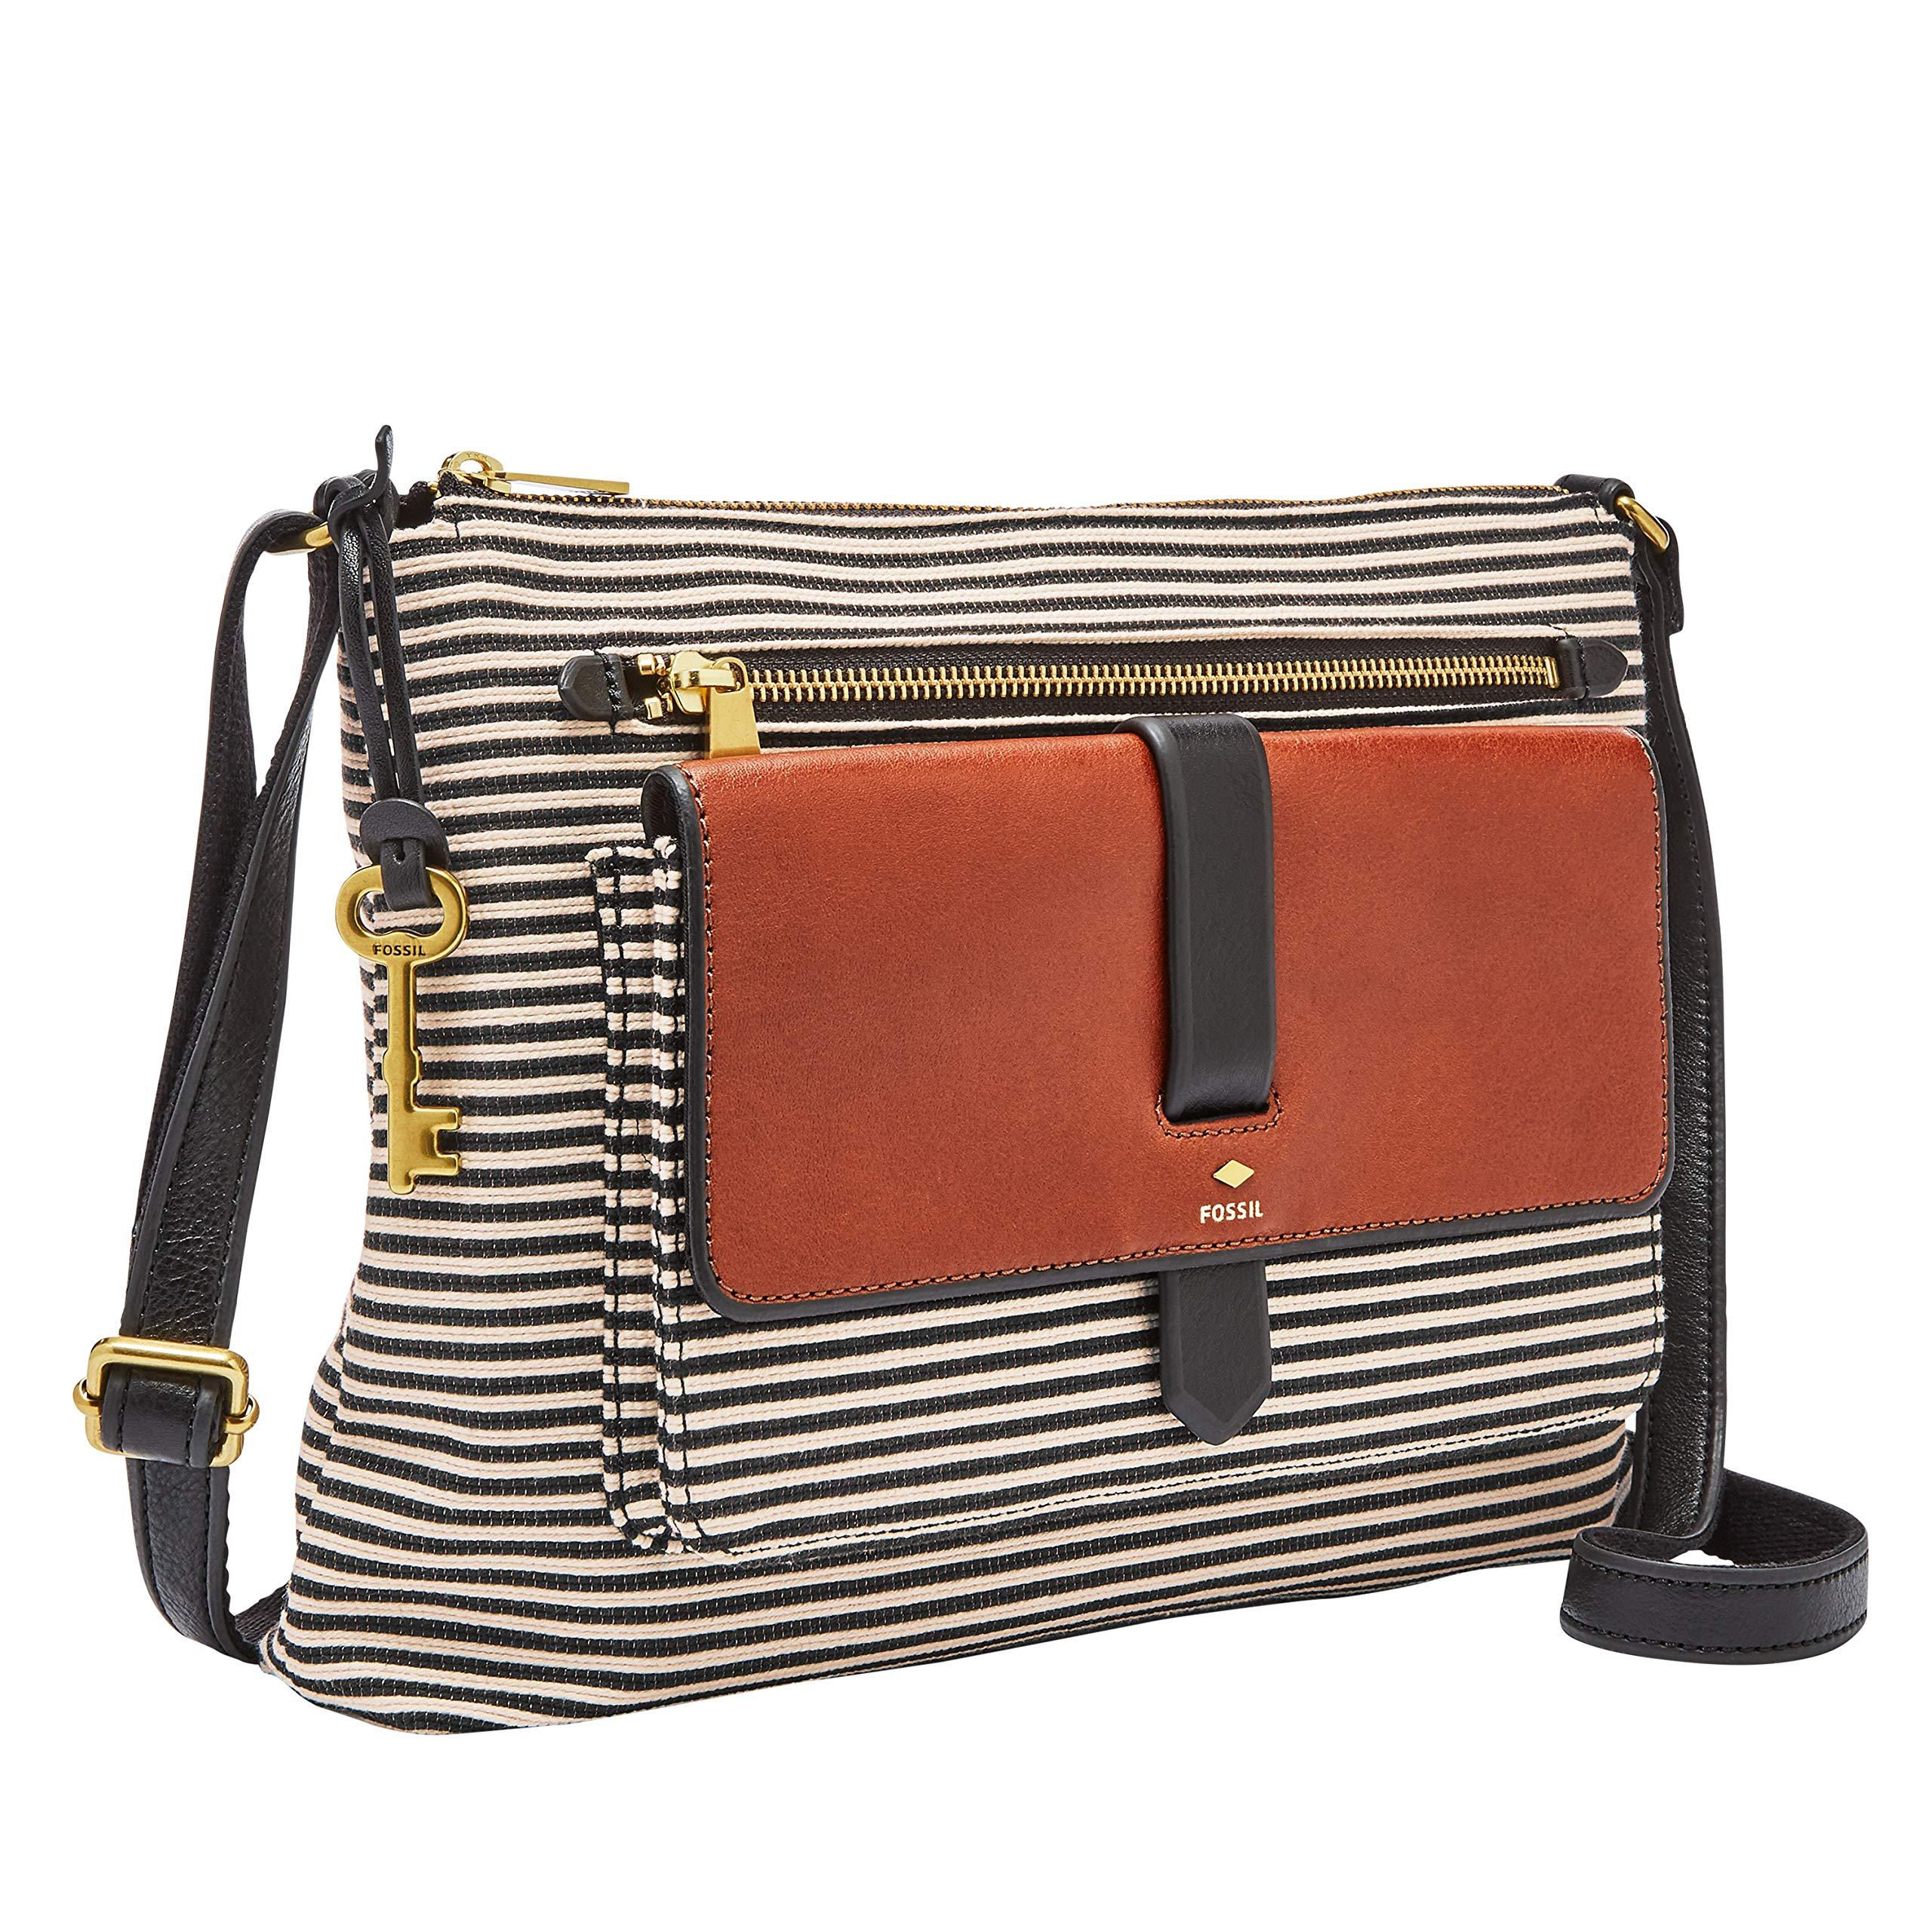 Fossil Kinley Fabric Crossbody Handbag in Black Stripe (Black) - Save ...